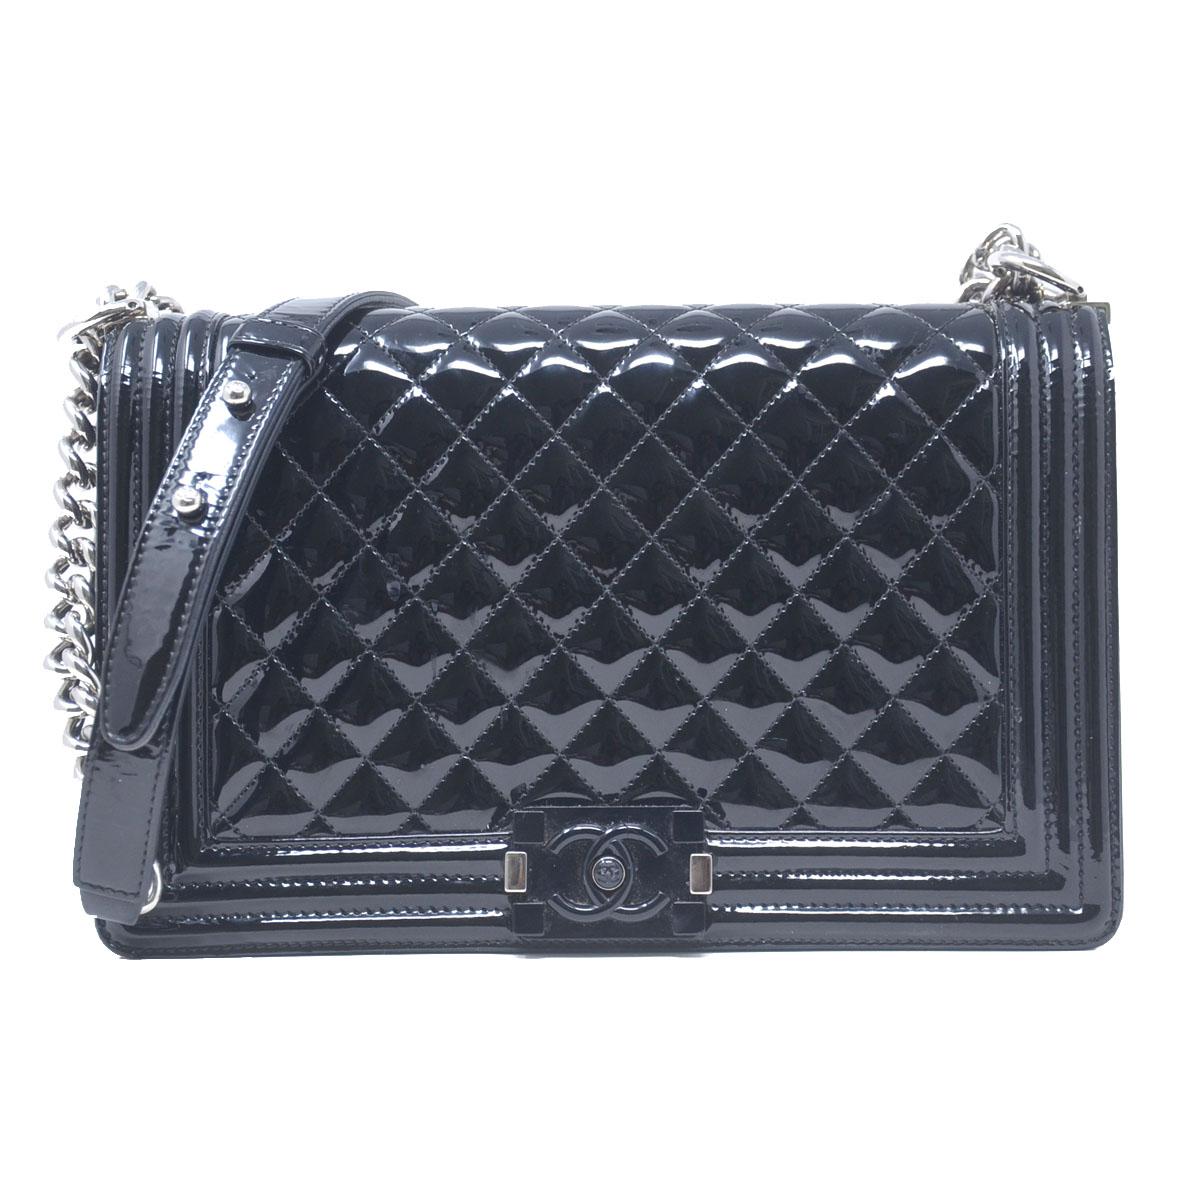 Chanel Le Boy Bag SHW Black Jumbo Patent Leather